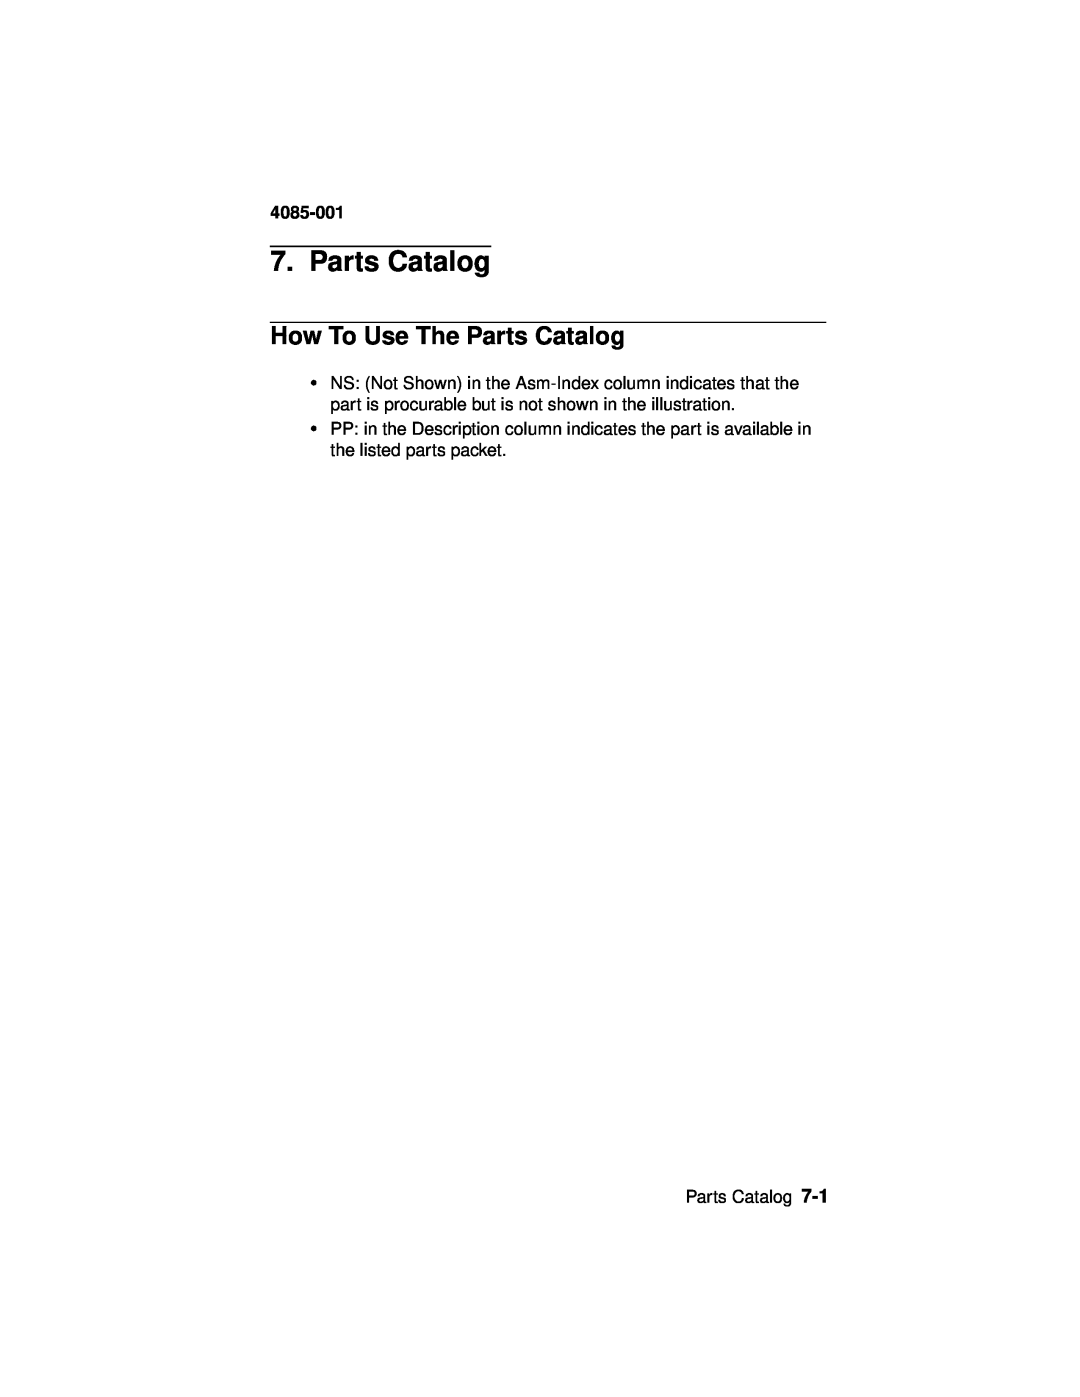 Lexmark Printer, J110 manual How To Use The Parts Catalog, 4085-001 